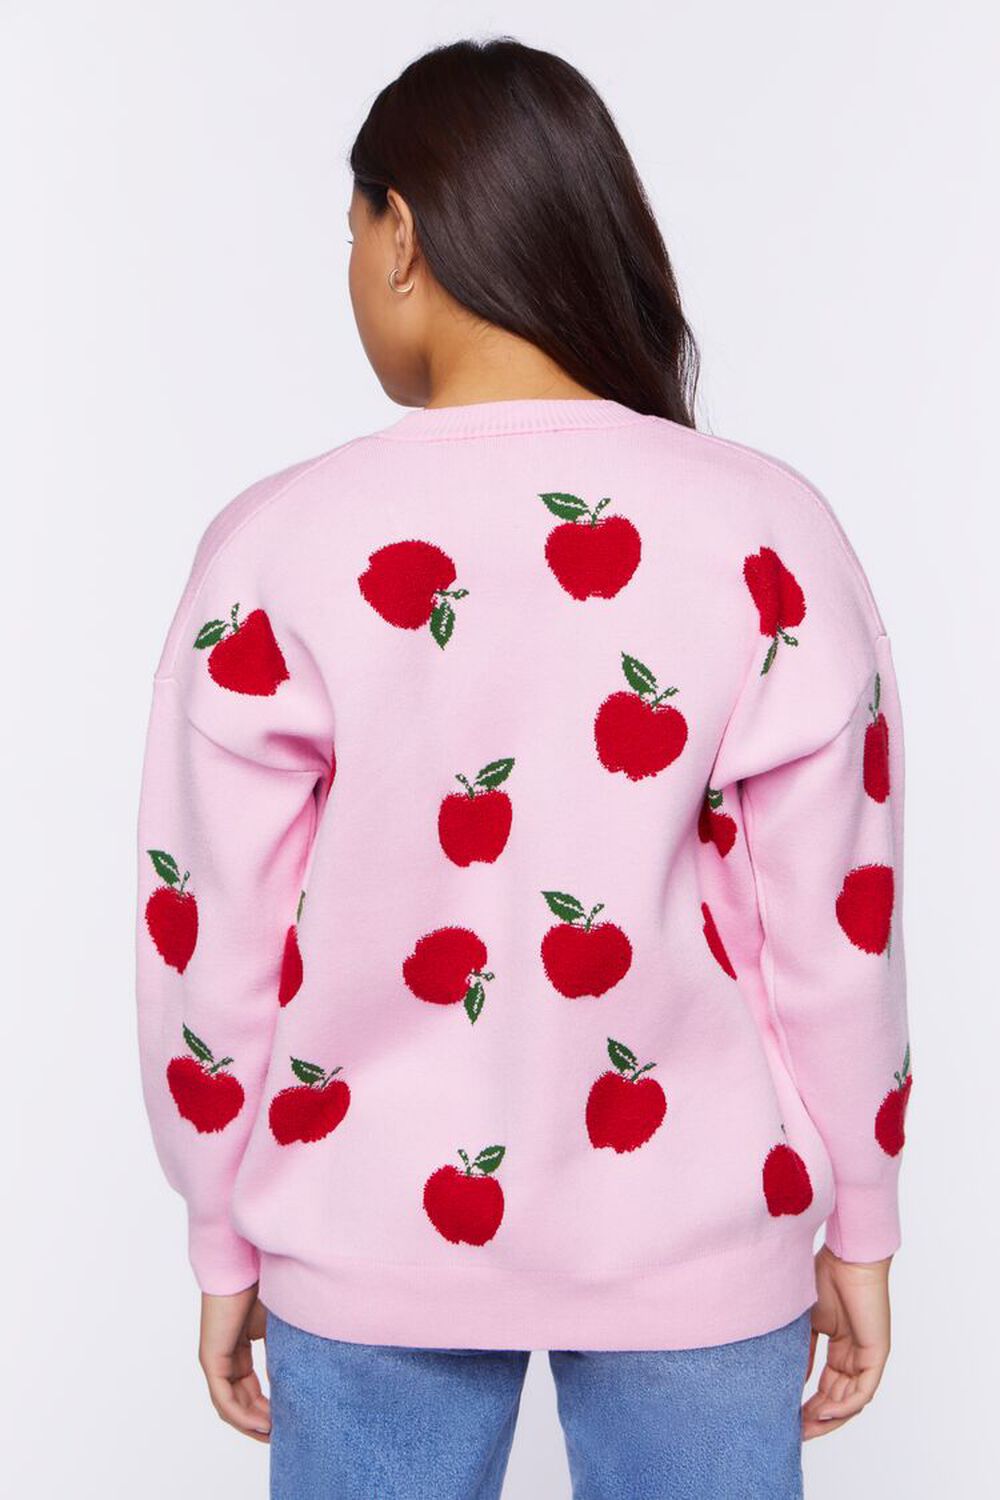 PINK/RED Apple Print Cardigan Sweater, image 3